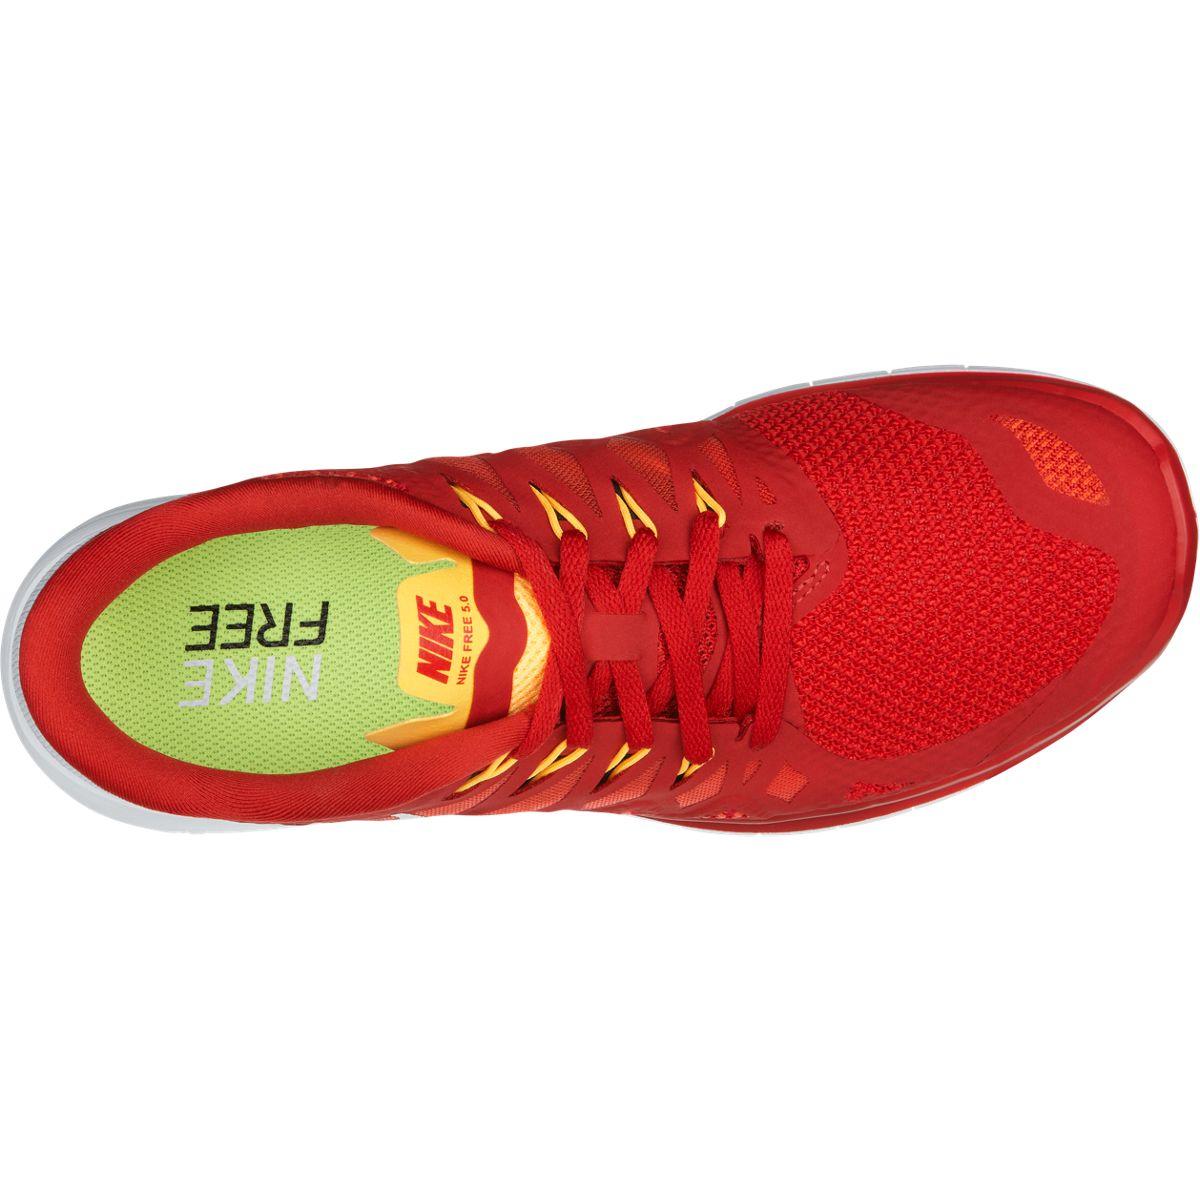 Nike Mens Free 5.0+ Running Shoes - Gym Red/Light Crimson - Tennisnuts.com